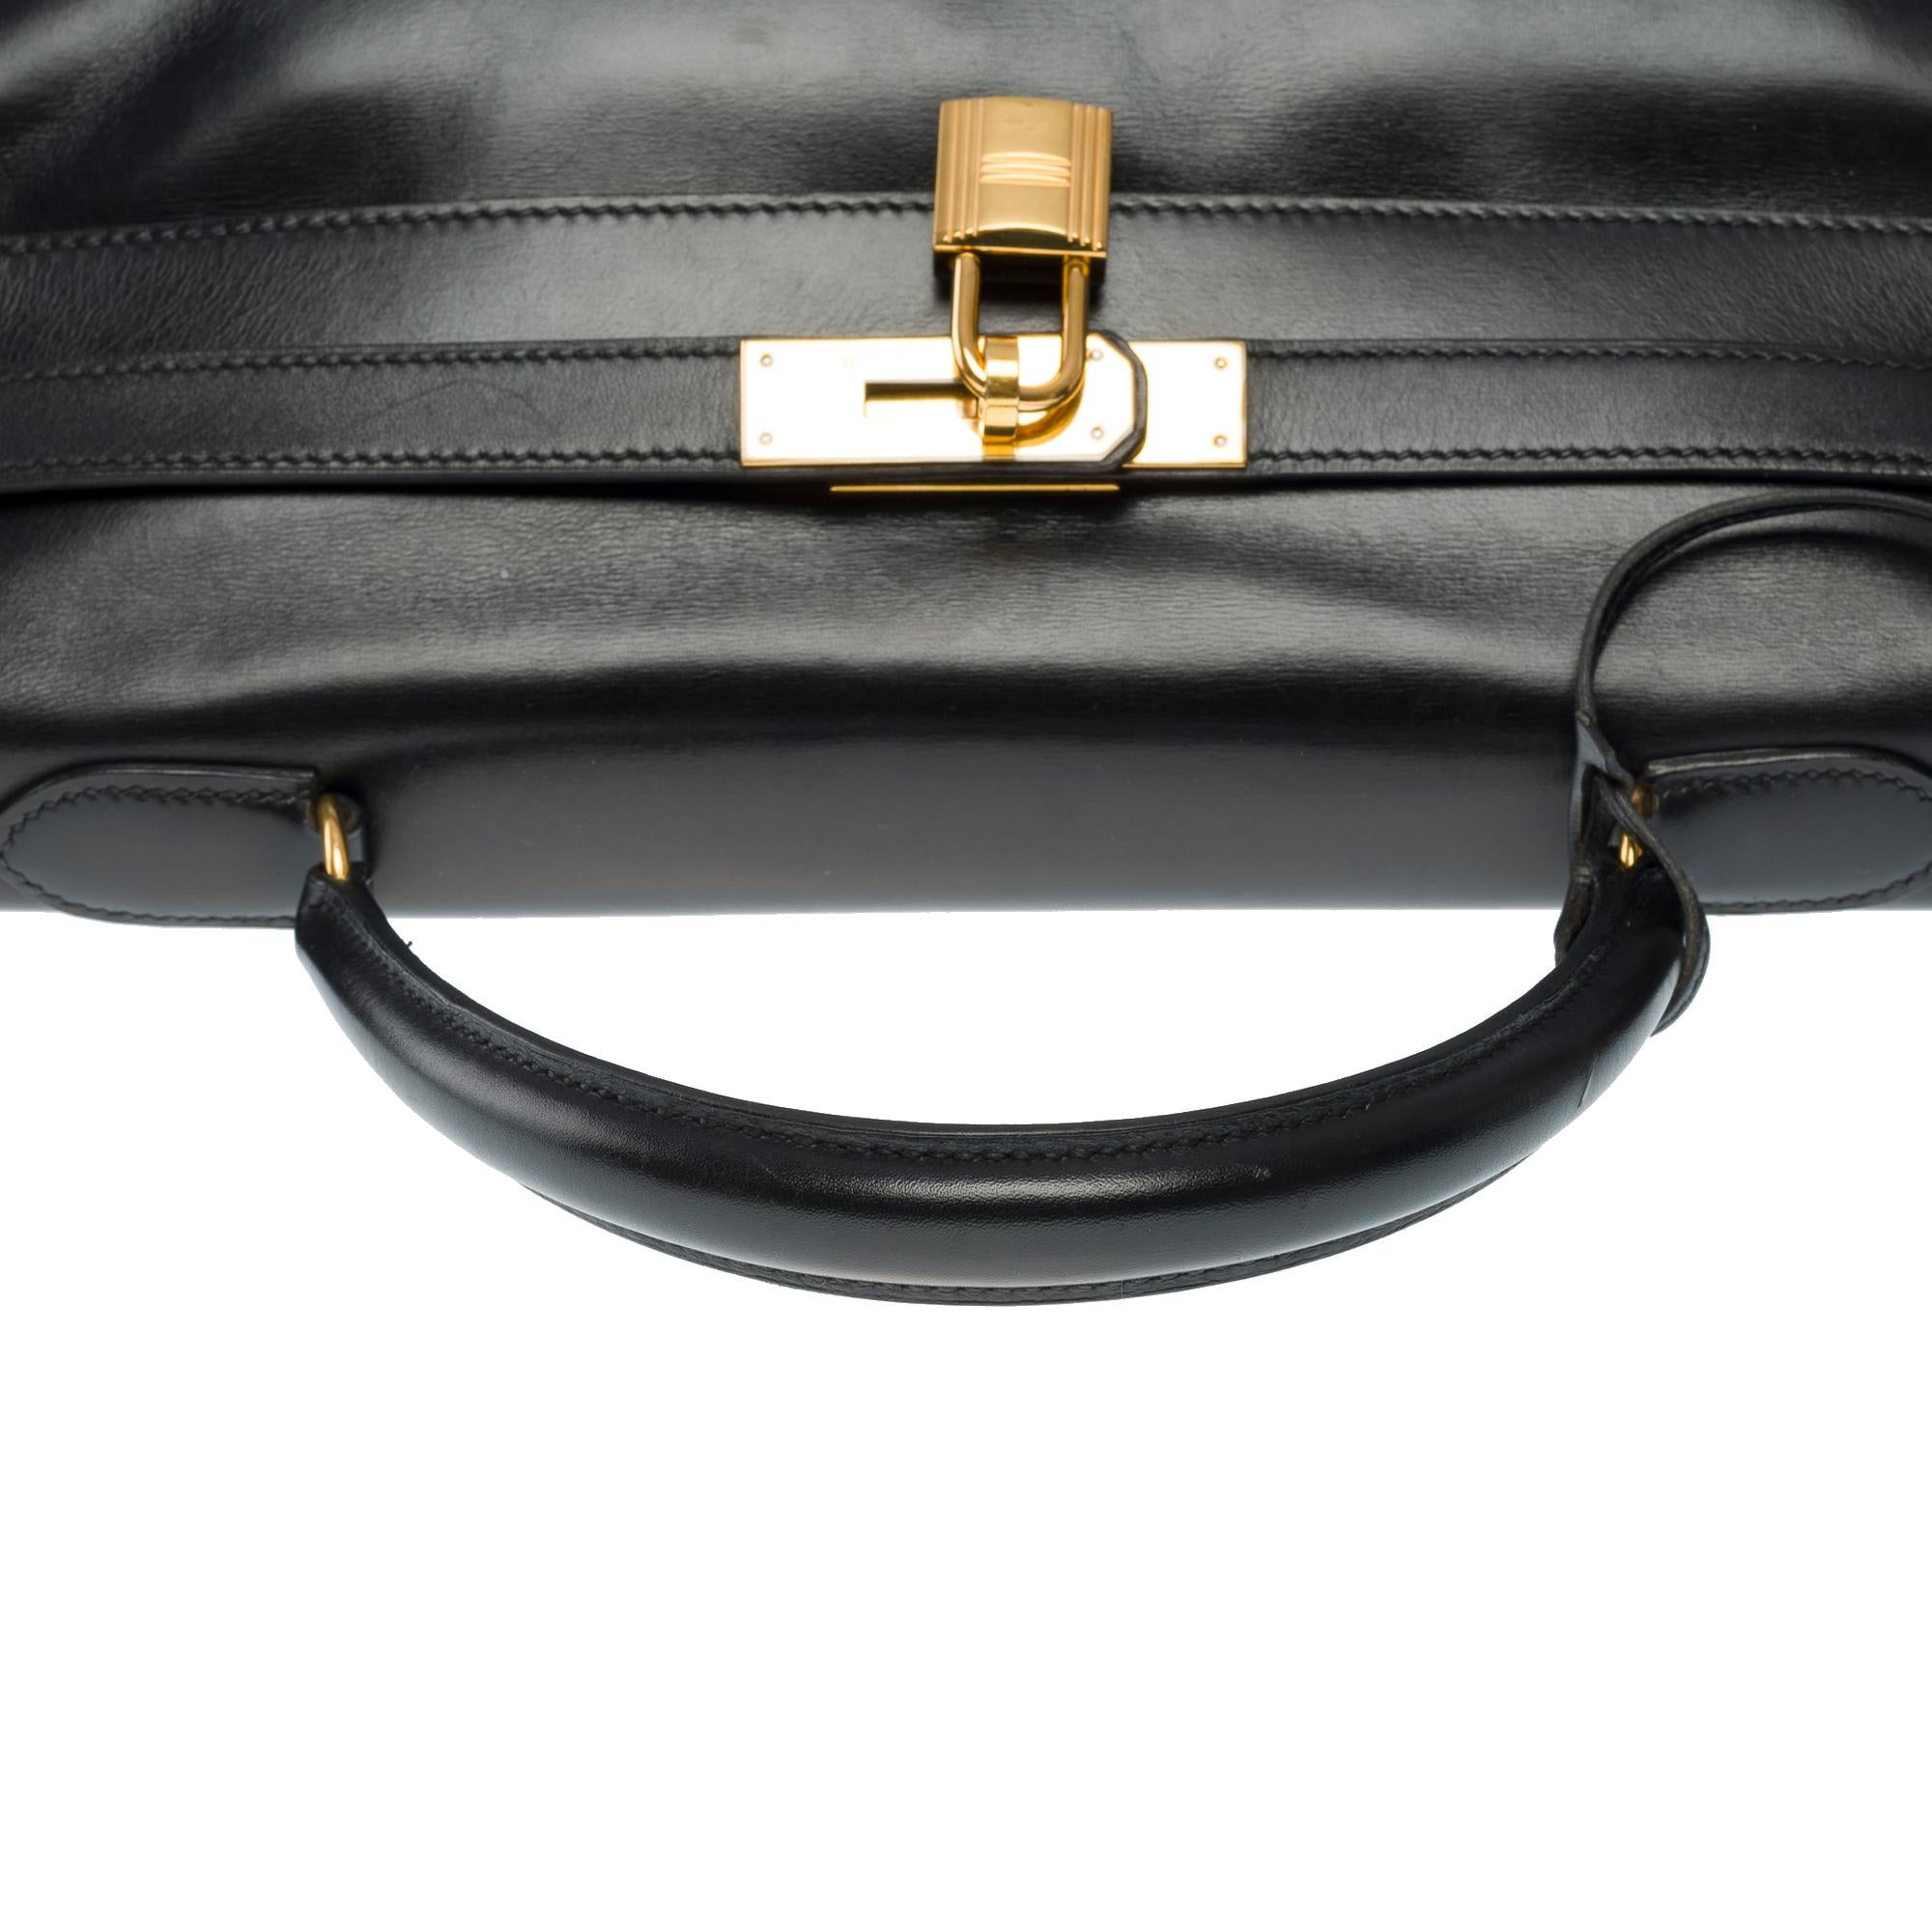 Hermès Kelly 35 retourne handbag strap in black box calfskin leather, GHW 7